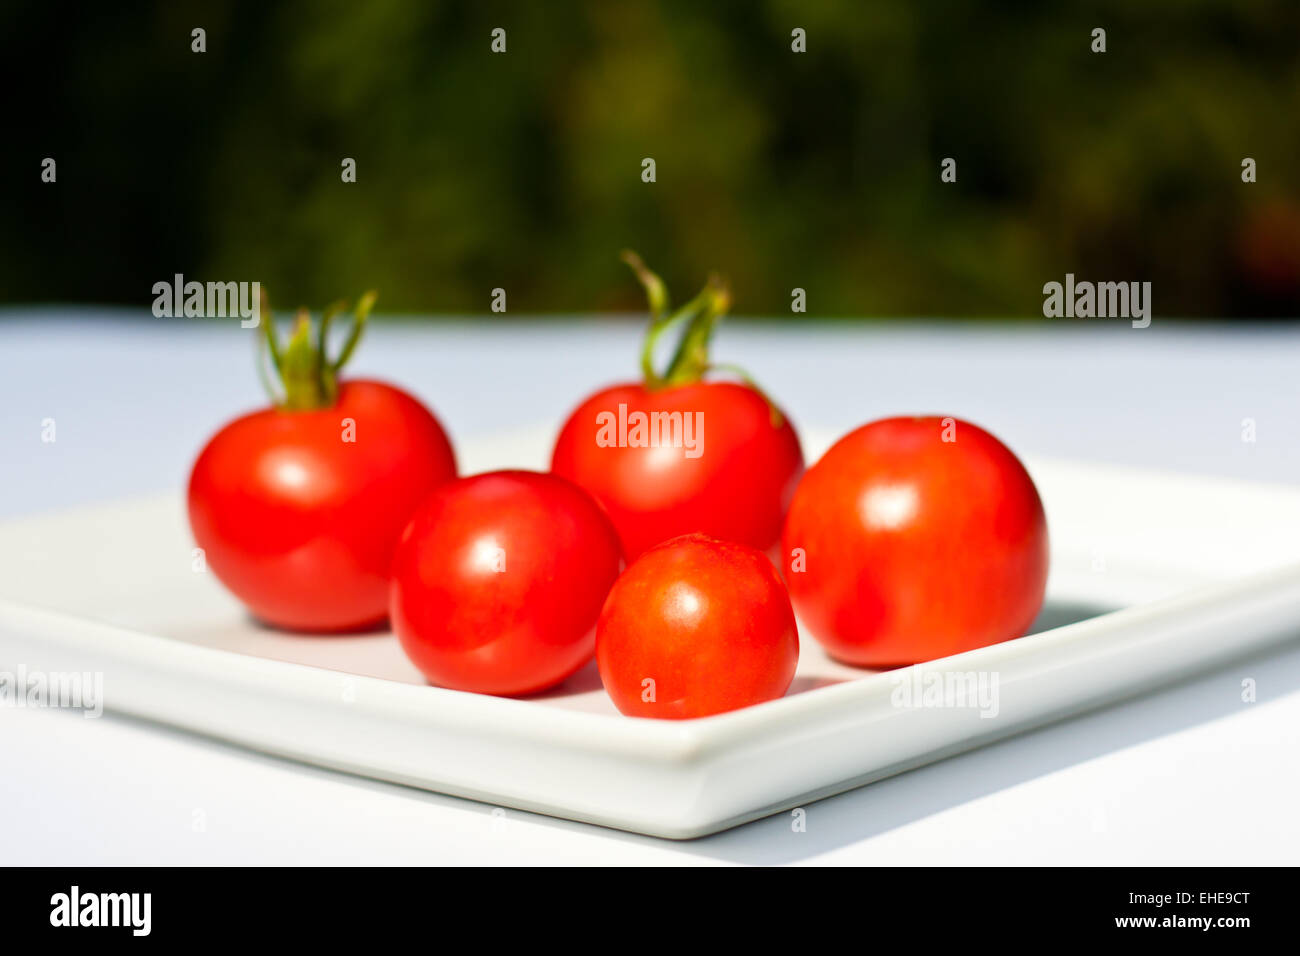 Tomaten, tomatoes Stock Photo